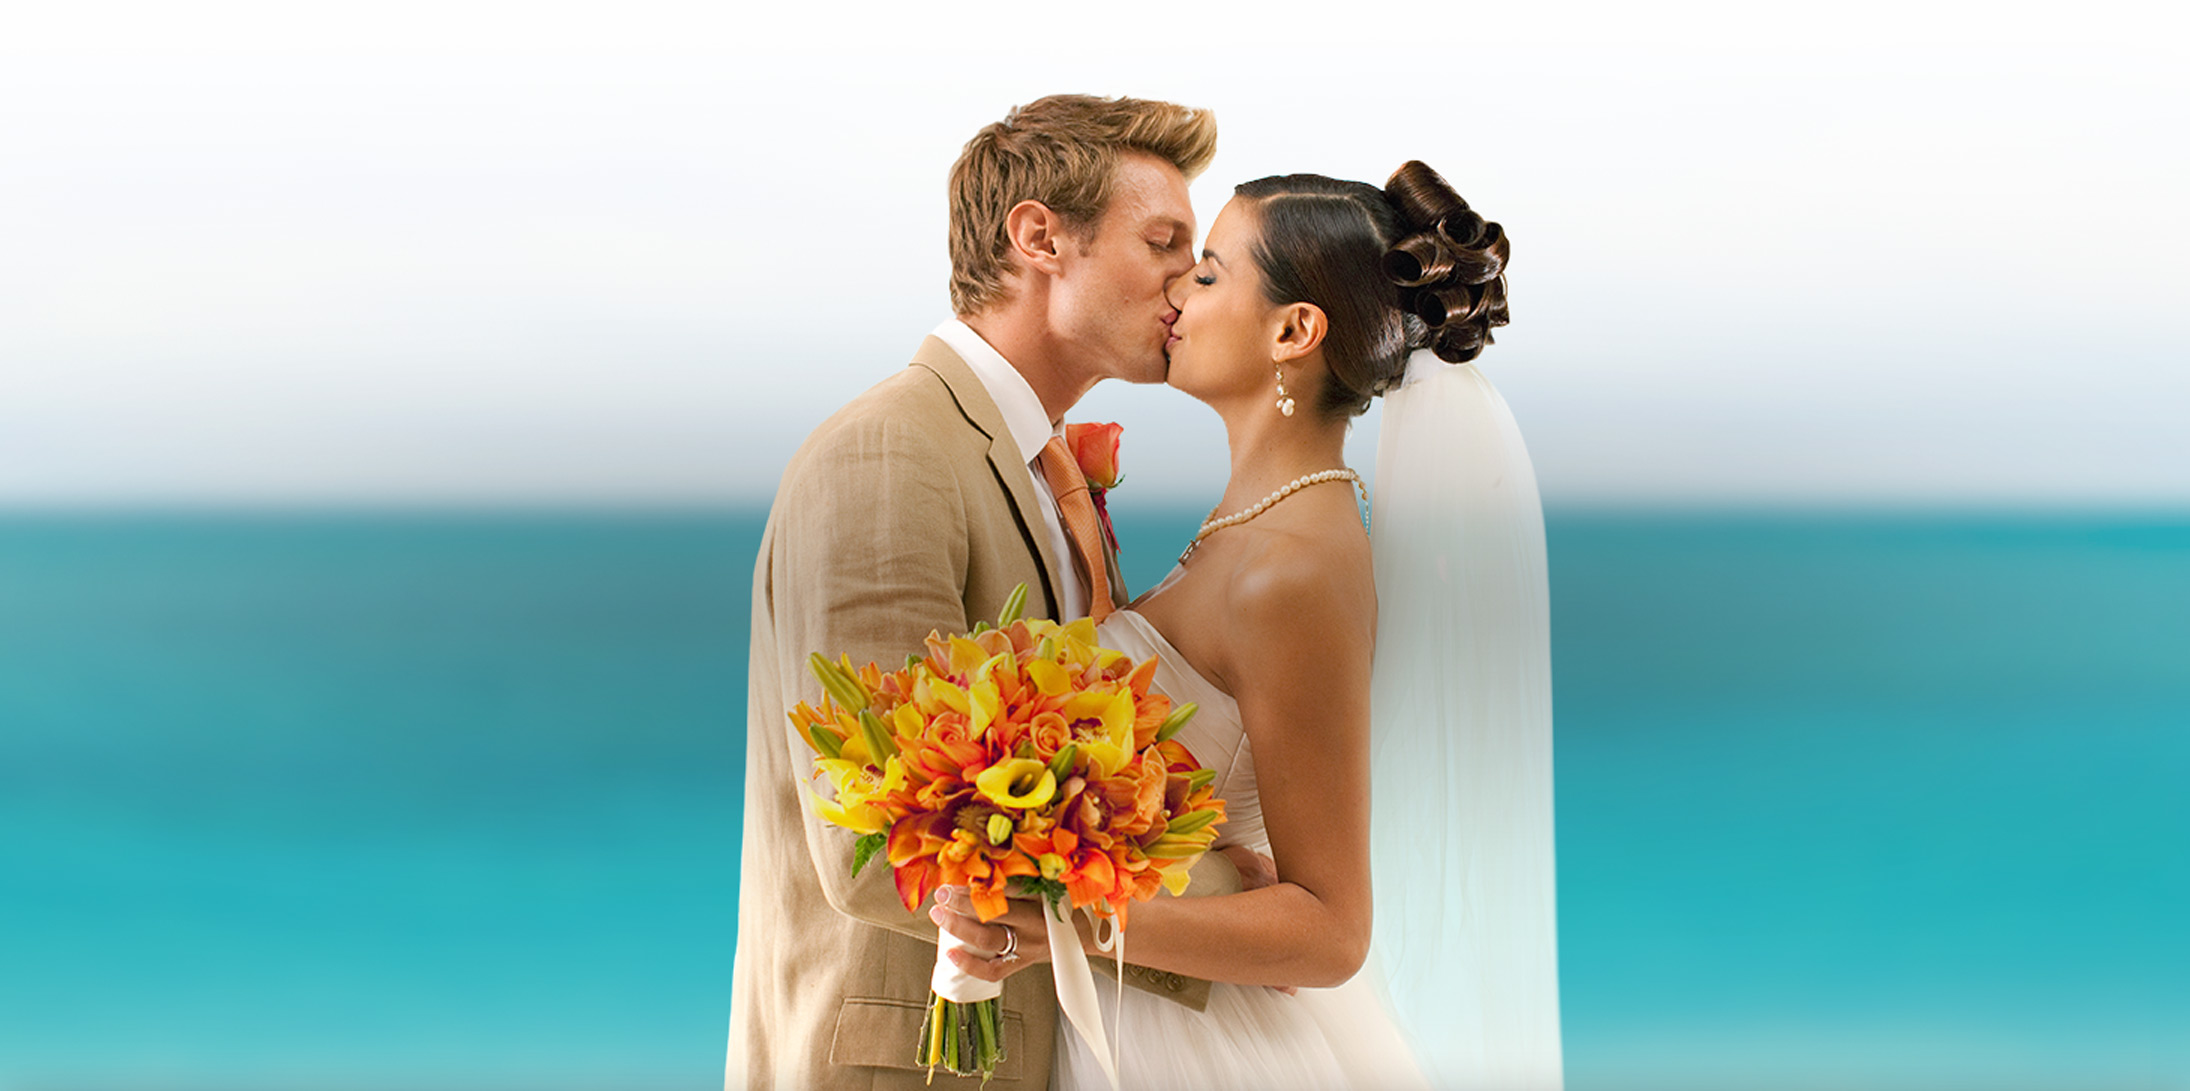 https://cdn.sandals.com/beaches/v12/images/weddings/promotions/bride-and-groom-ocean.jpg